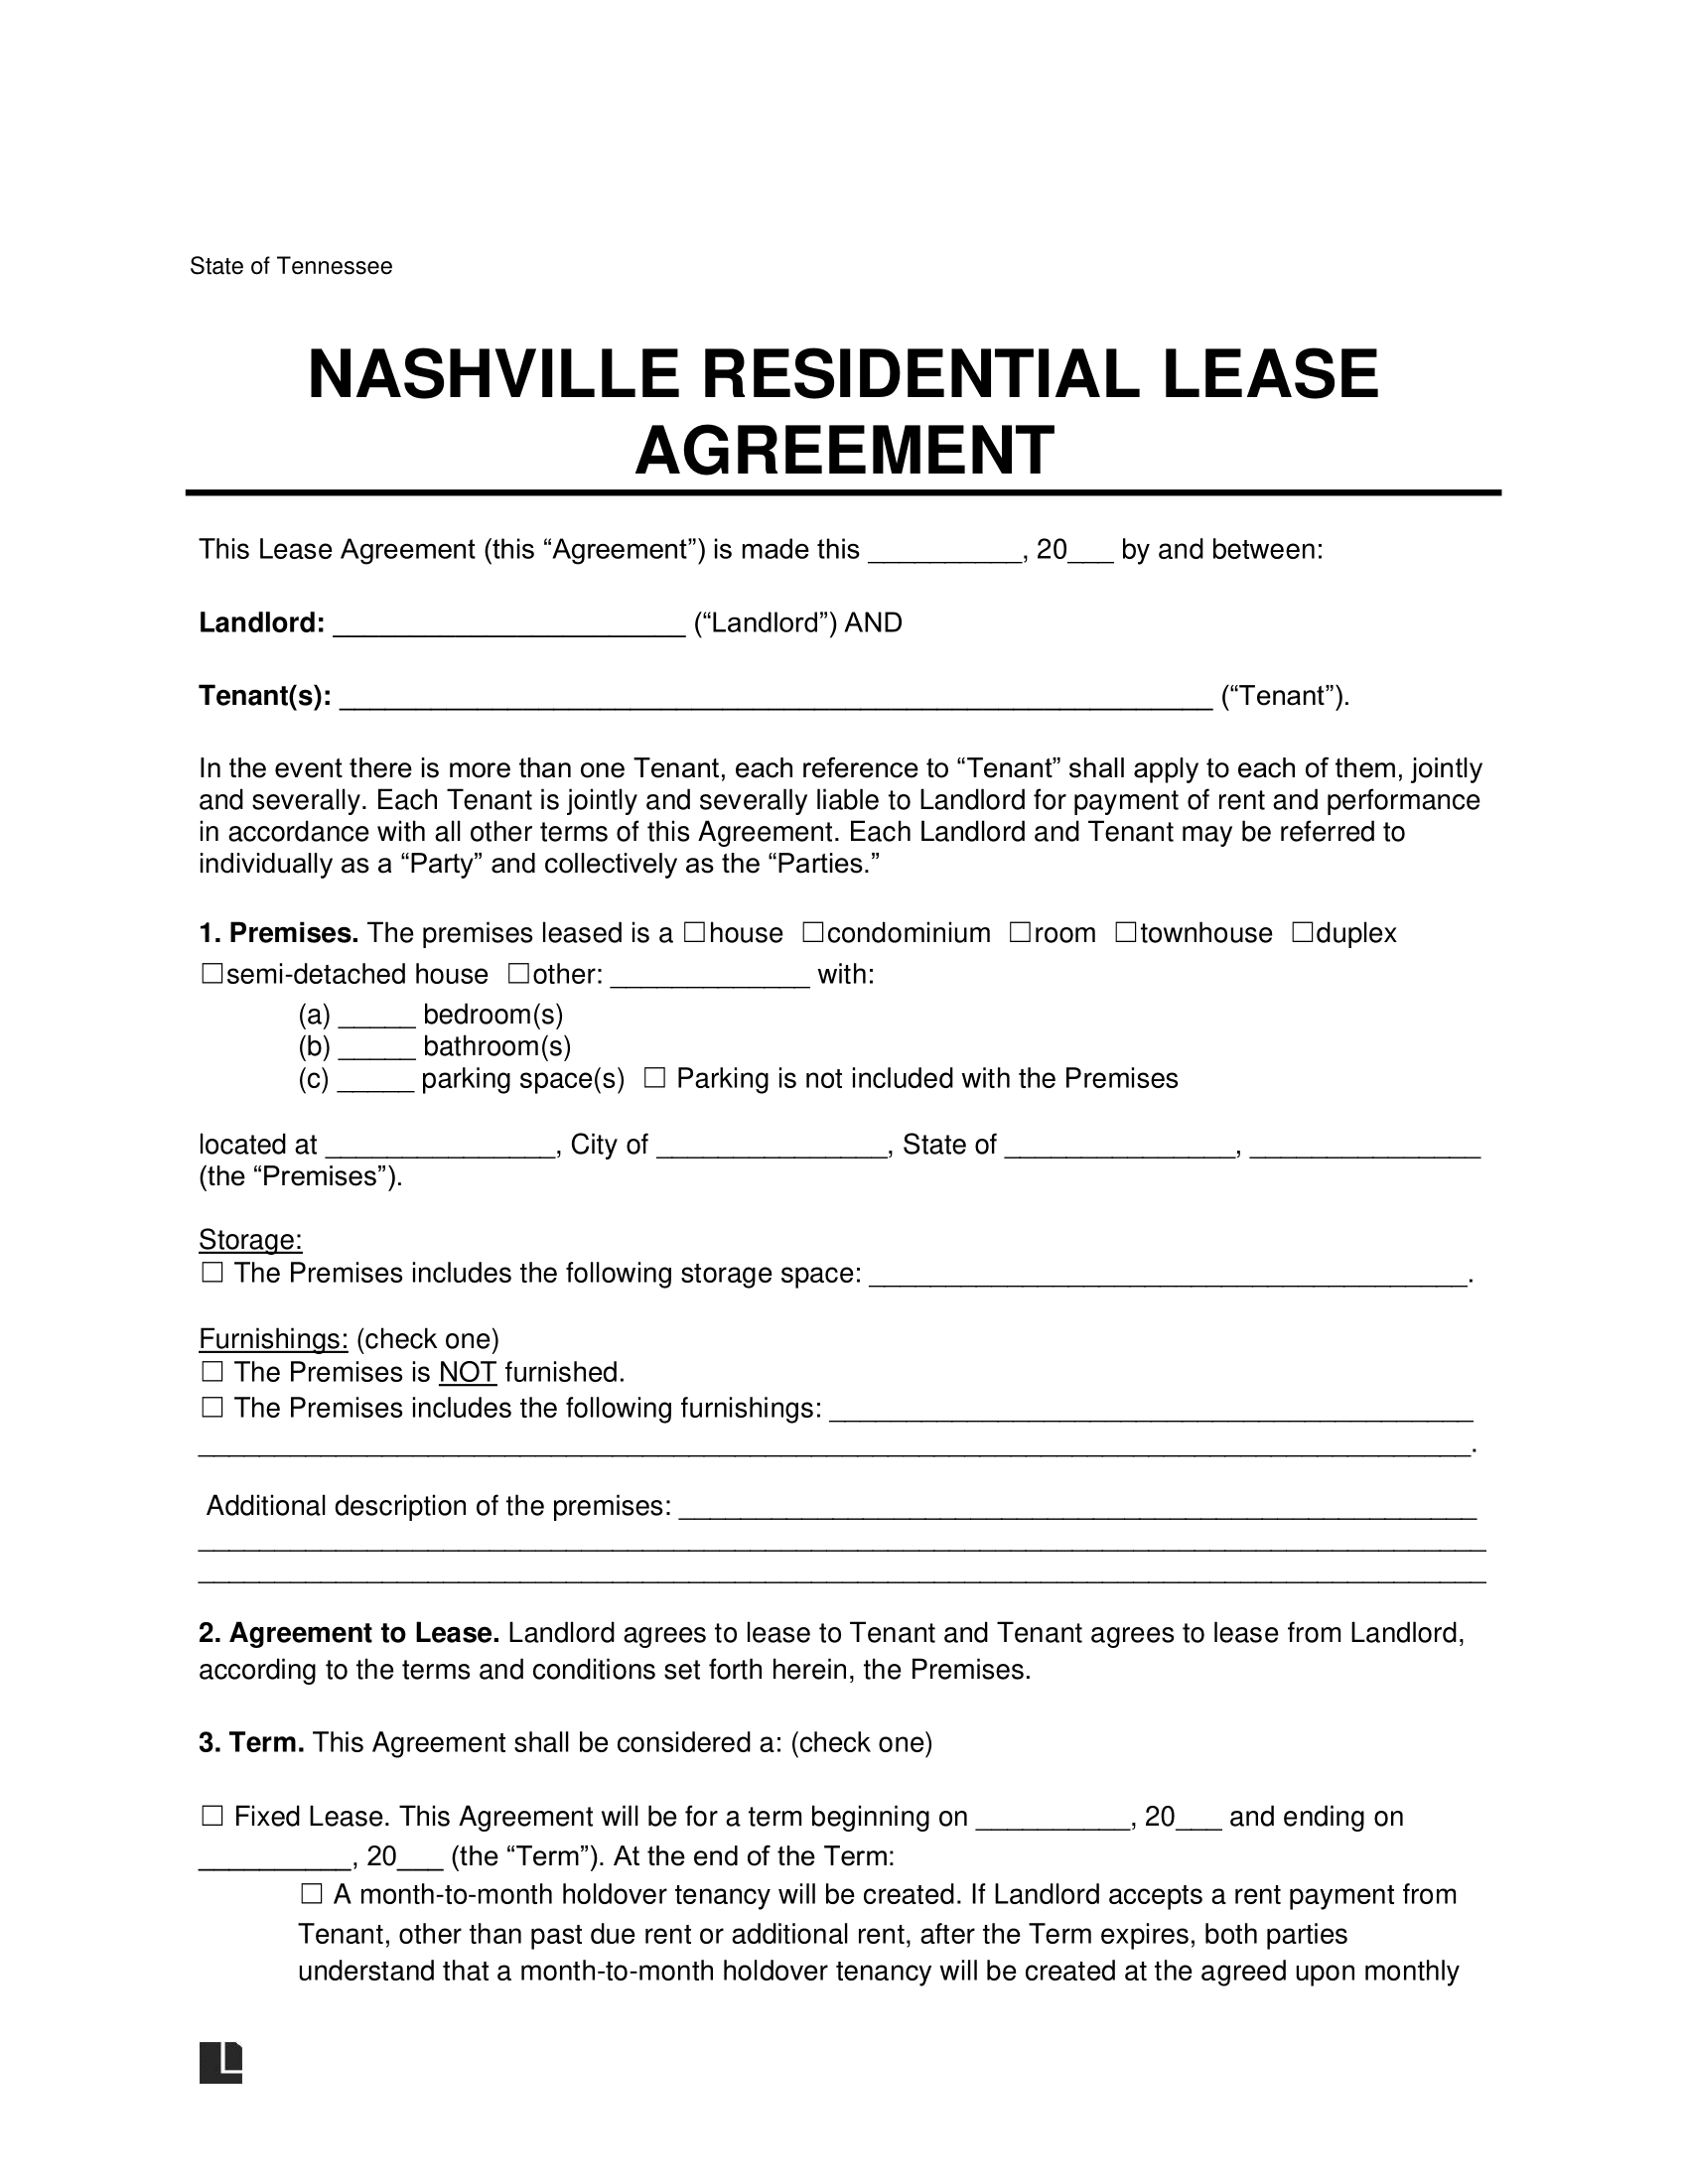 Nashville Residential Lease Agreement Template